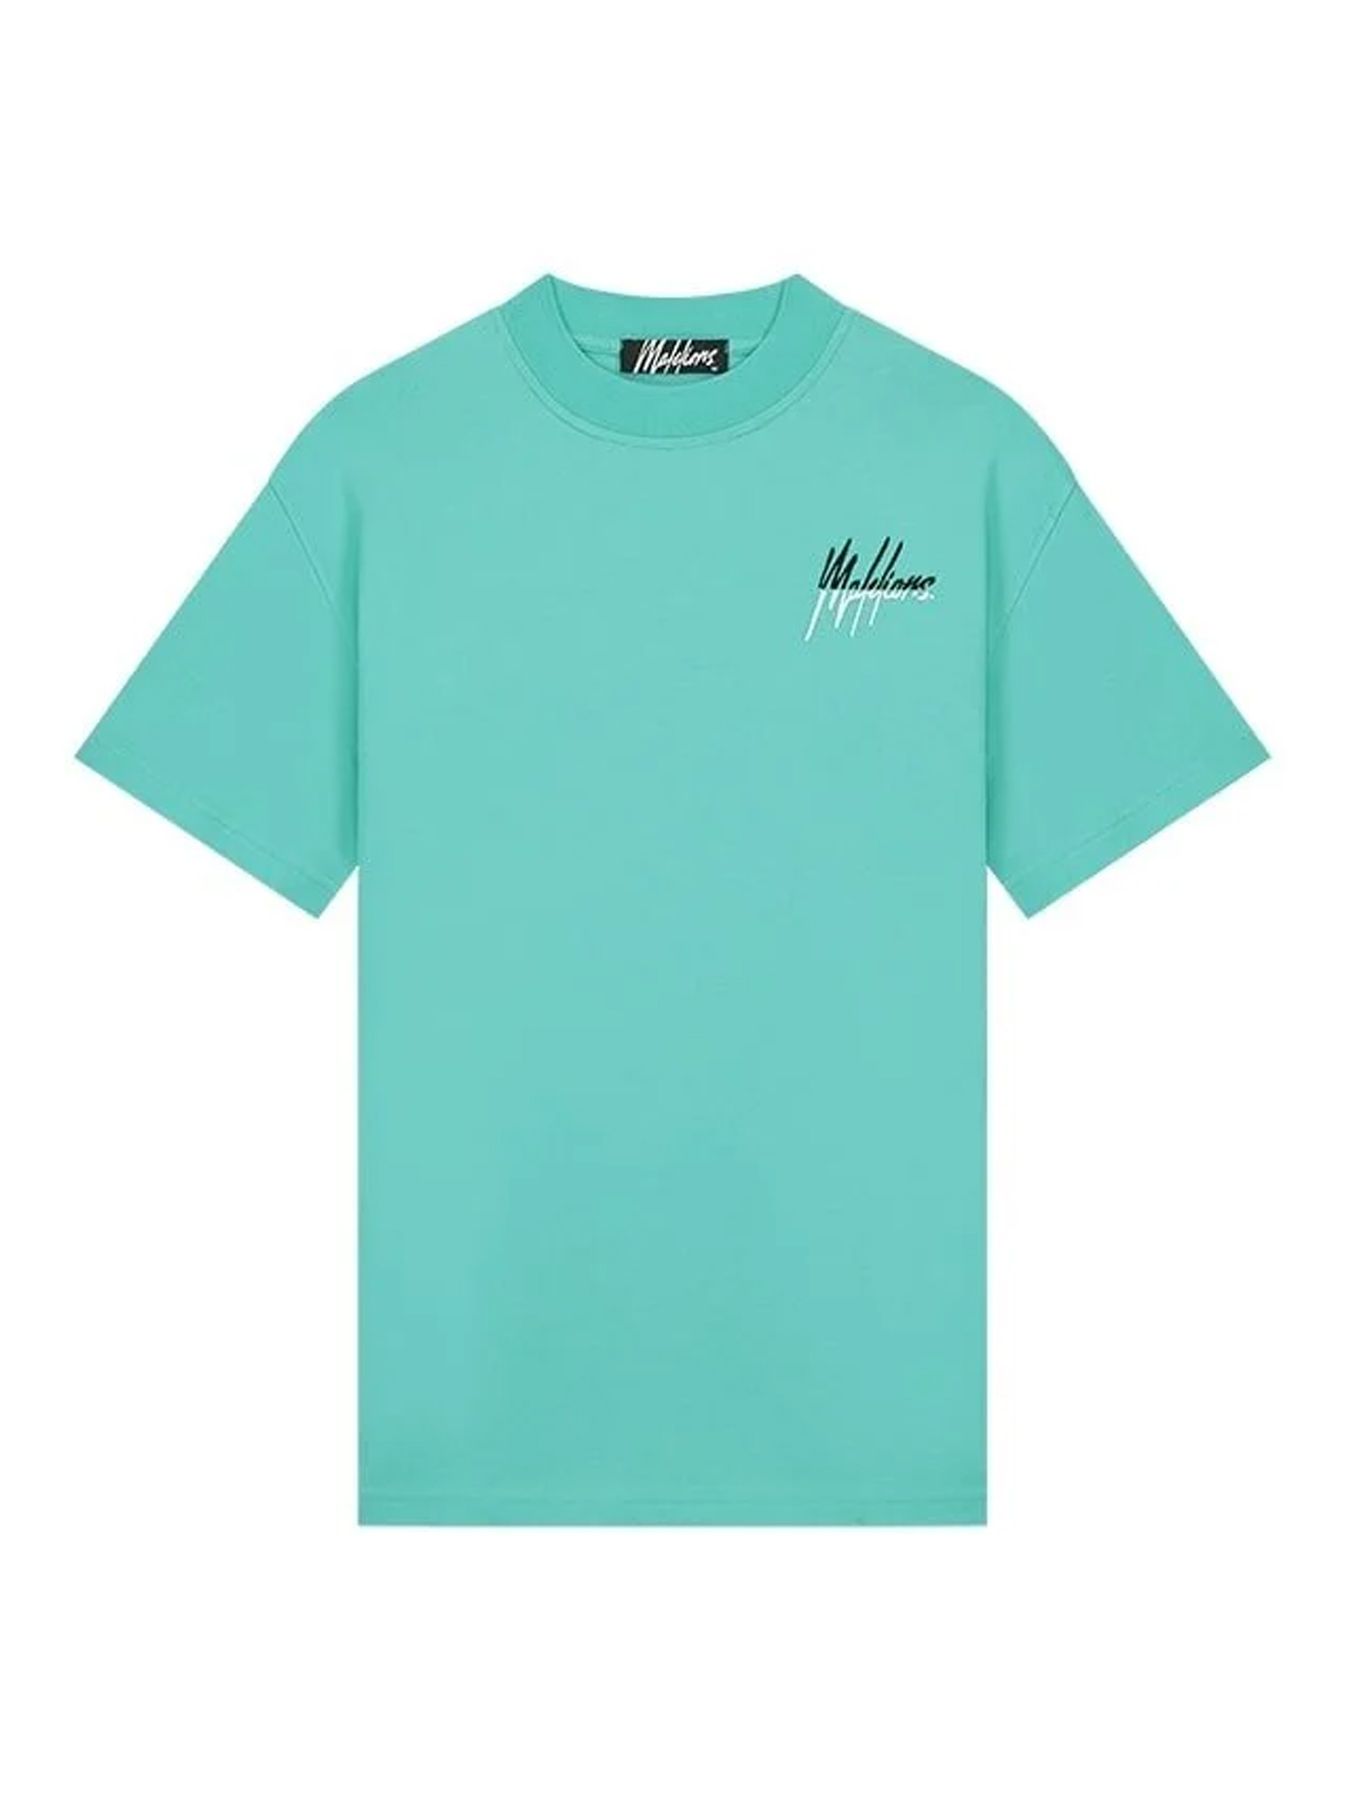 Malelions Men split t-shirt Turquoise/black 00108314-984